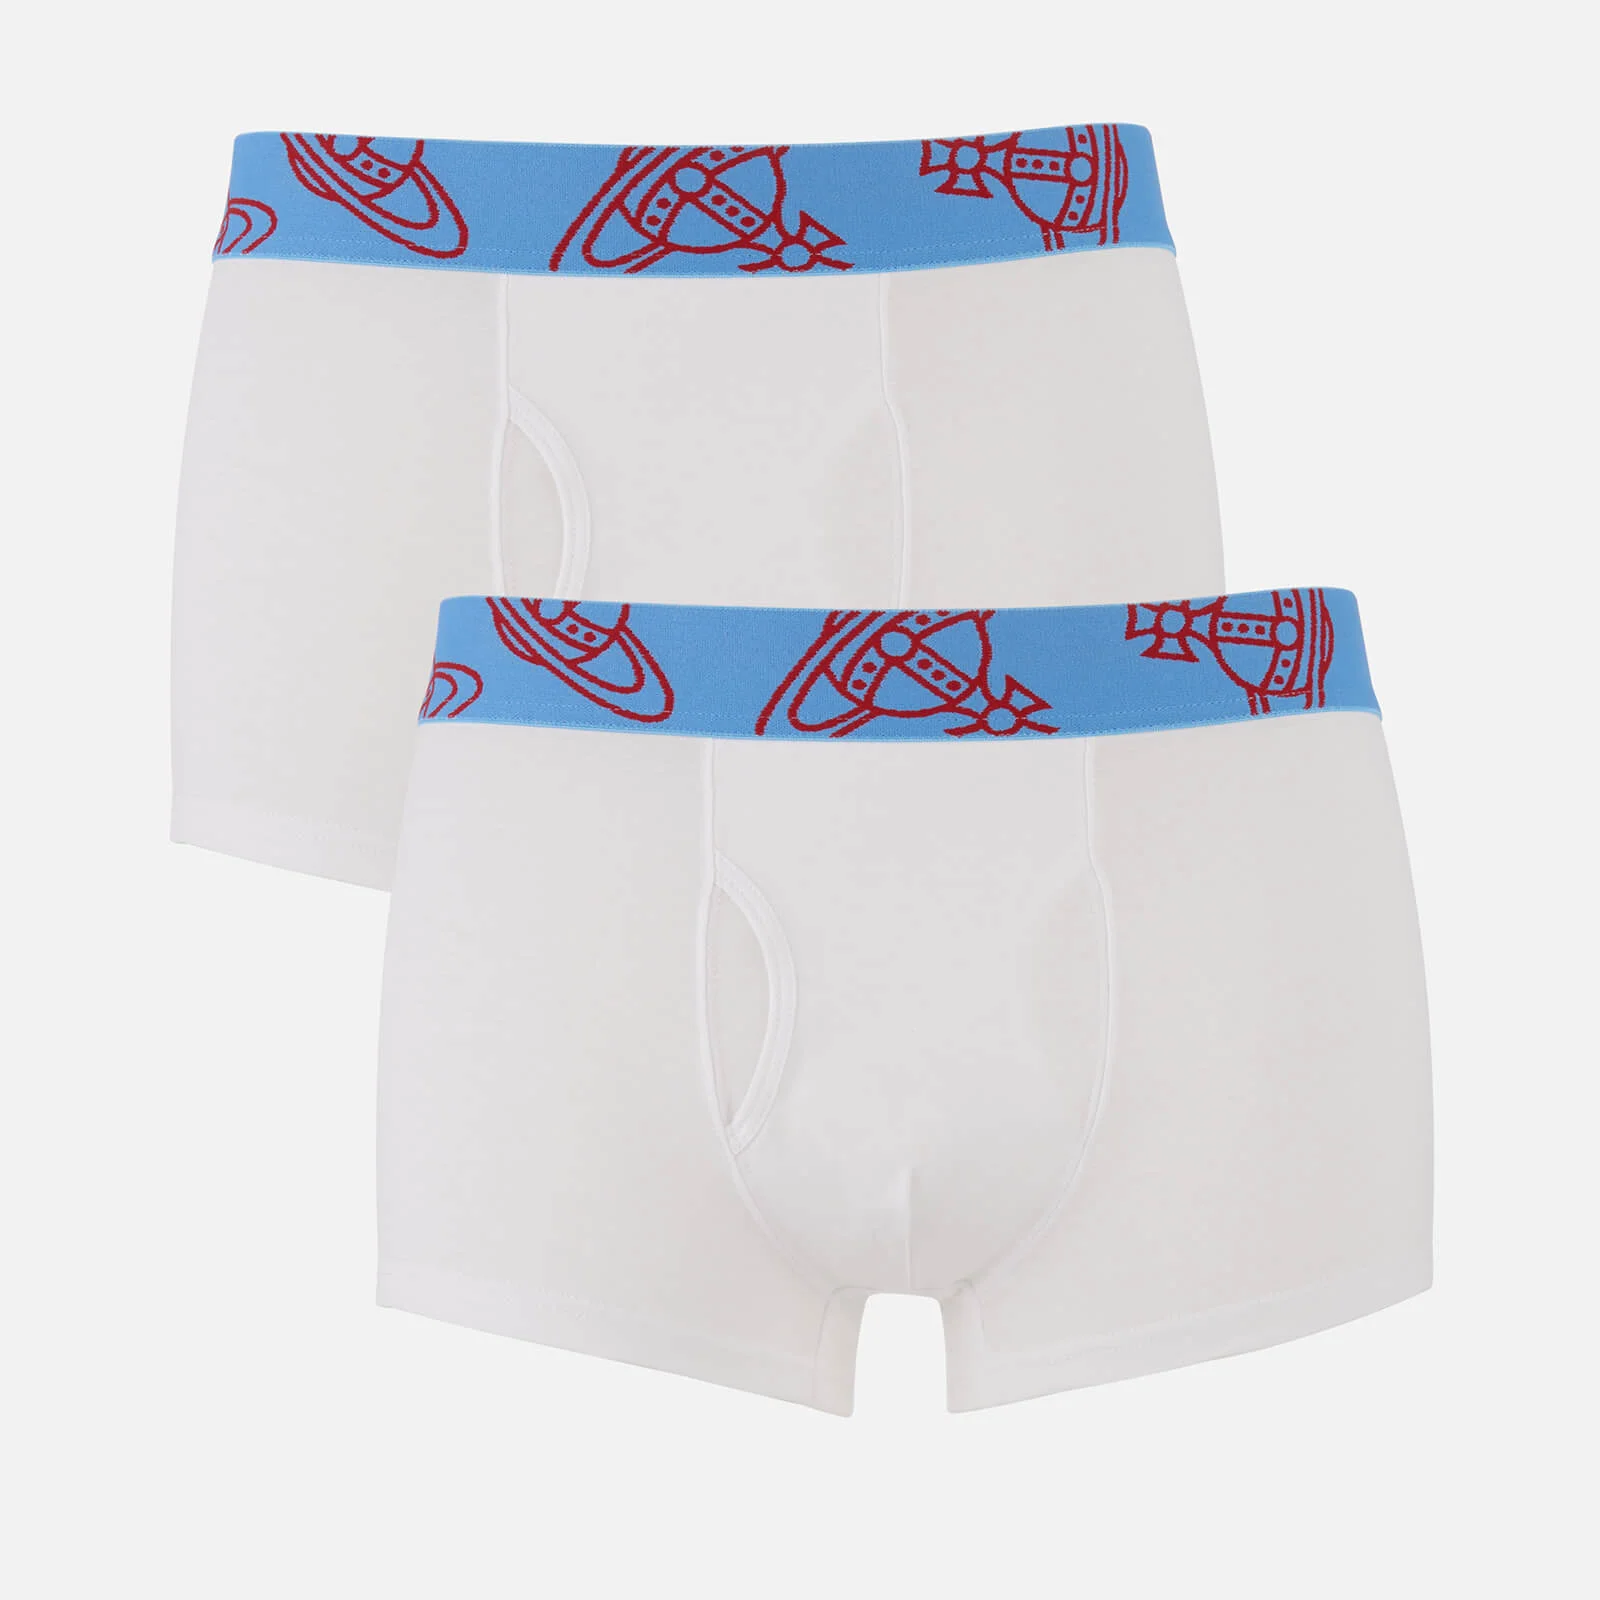 Vivienne Westwood Men's Two Pack Boxer Shorts - White Image 1